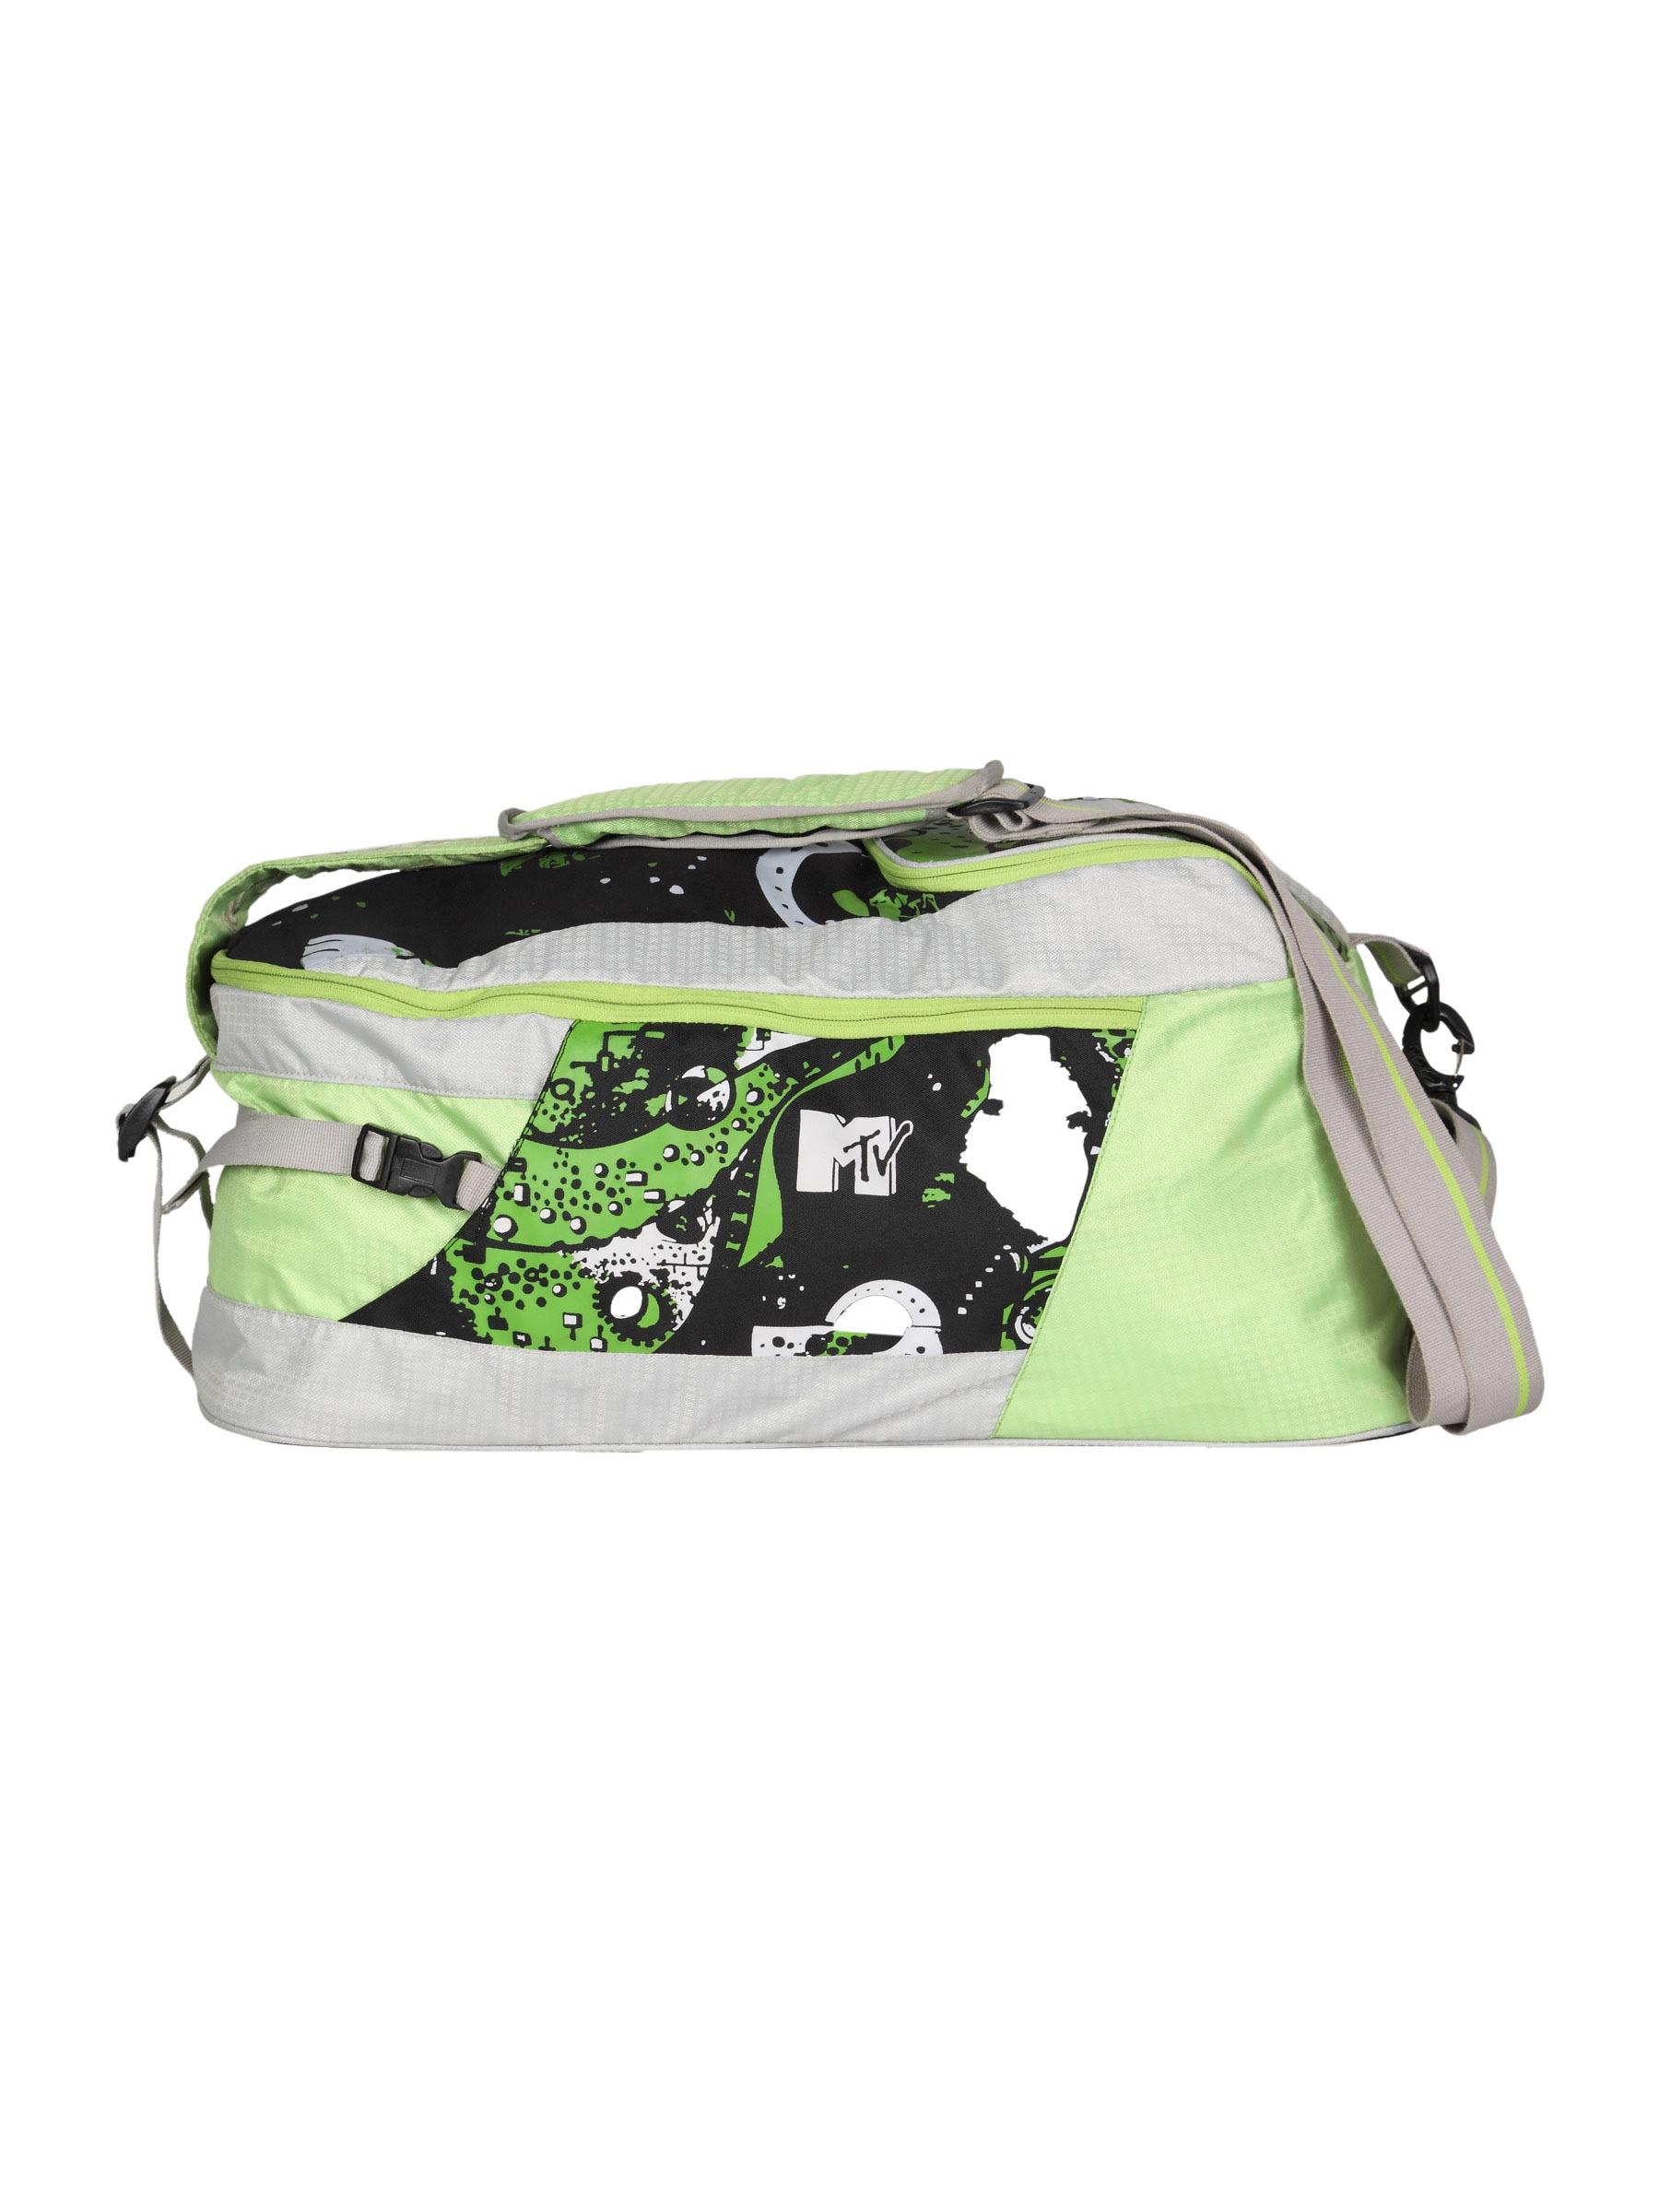 Wildcraft Unisex Green Printed Duffel Bag